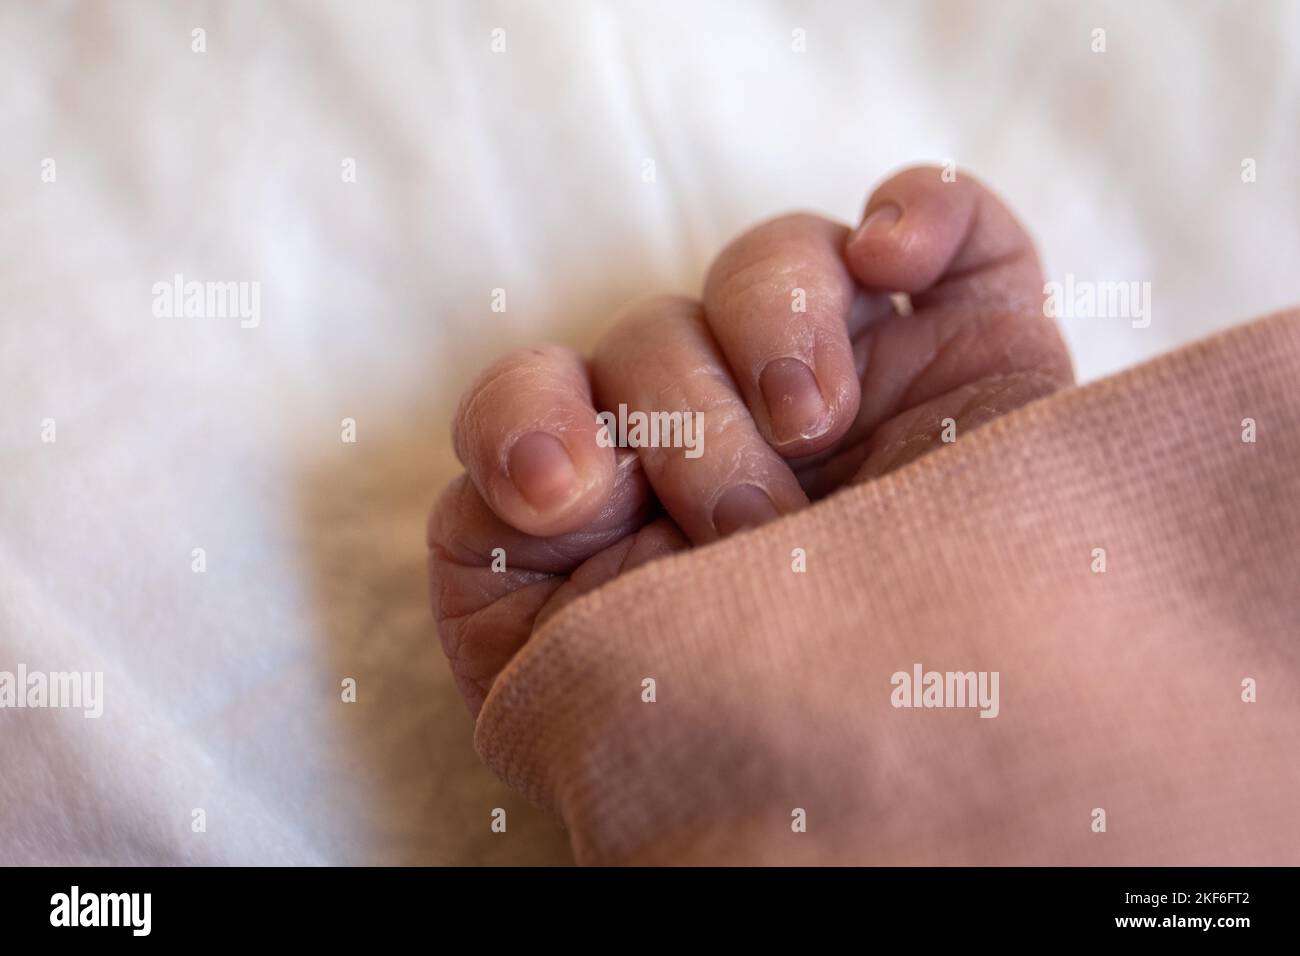 Newborn's hand. Small fingers and nails, peeling skin. Stock Photo